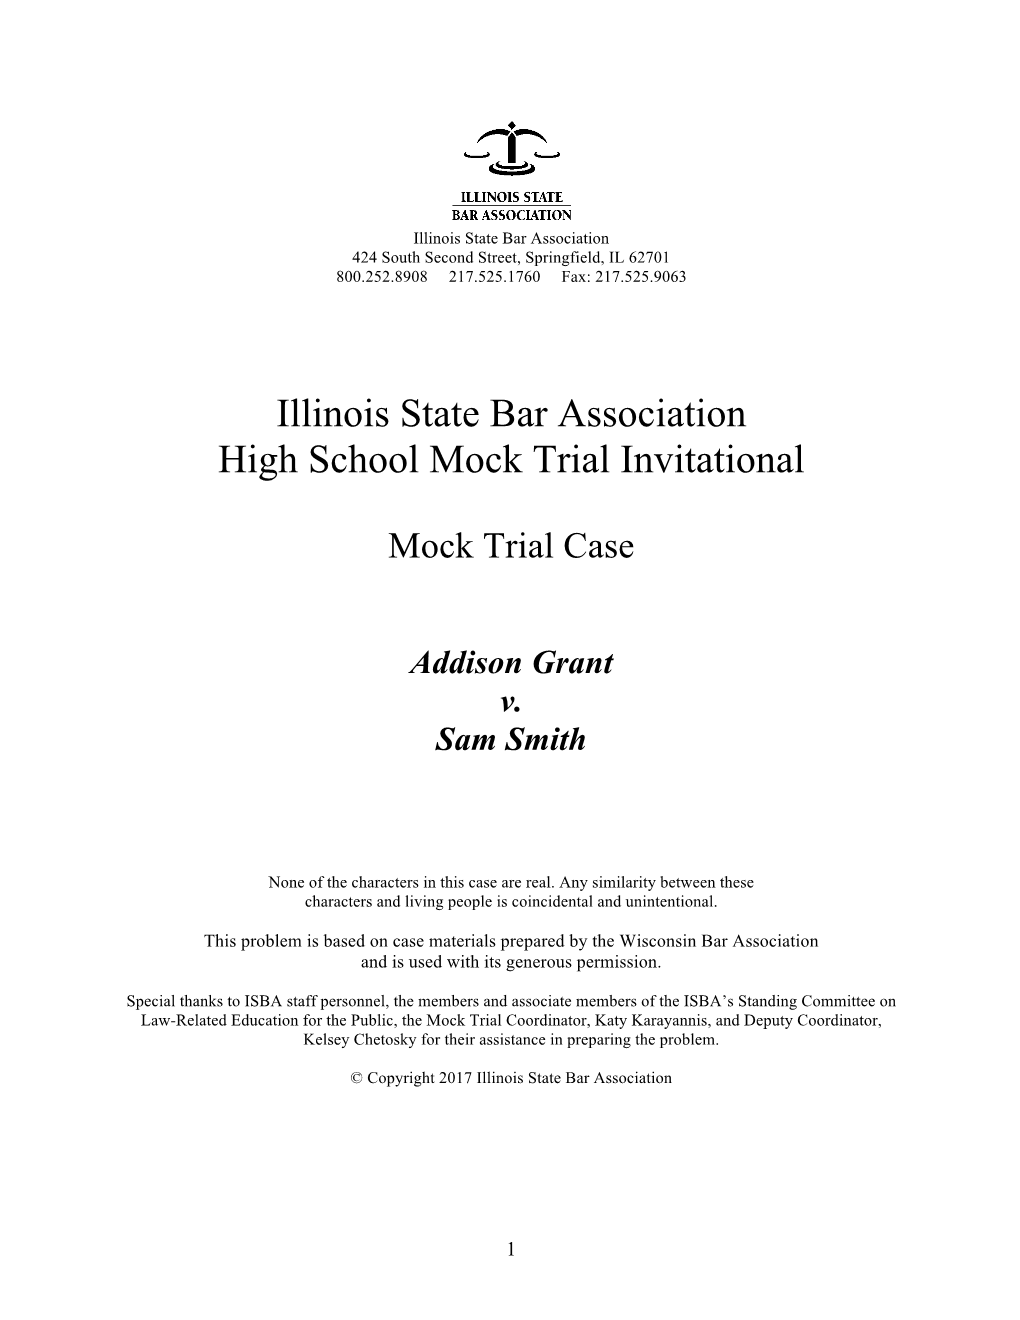 Illinois State Bar Association High School Mock Trial Invitational